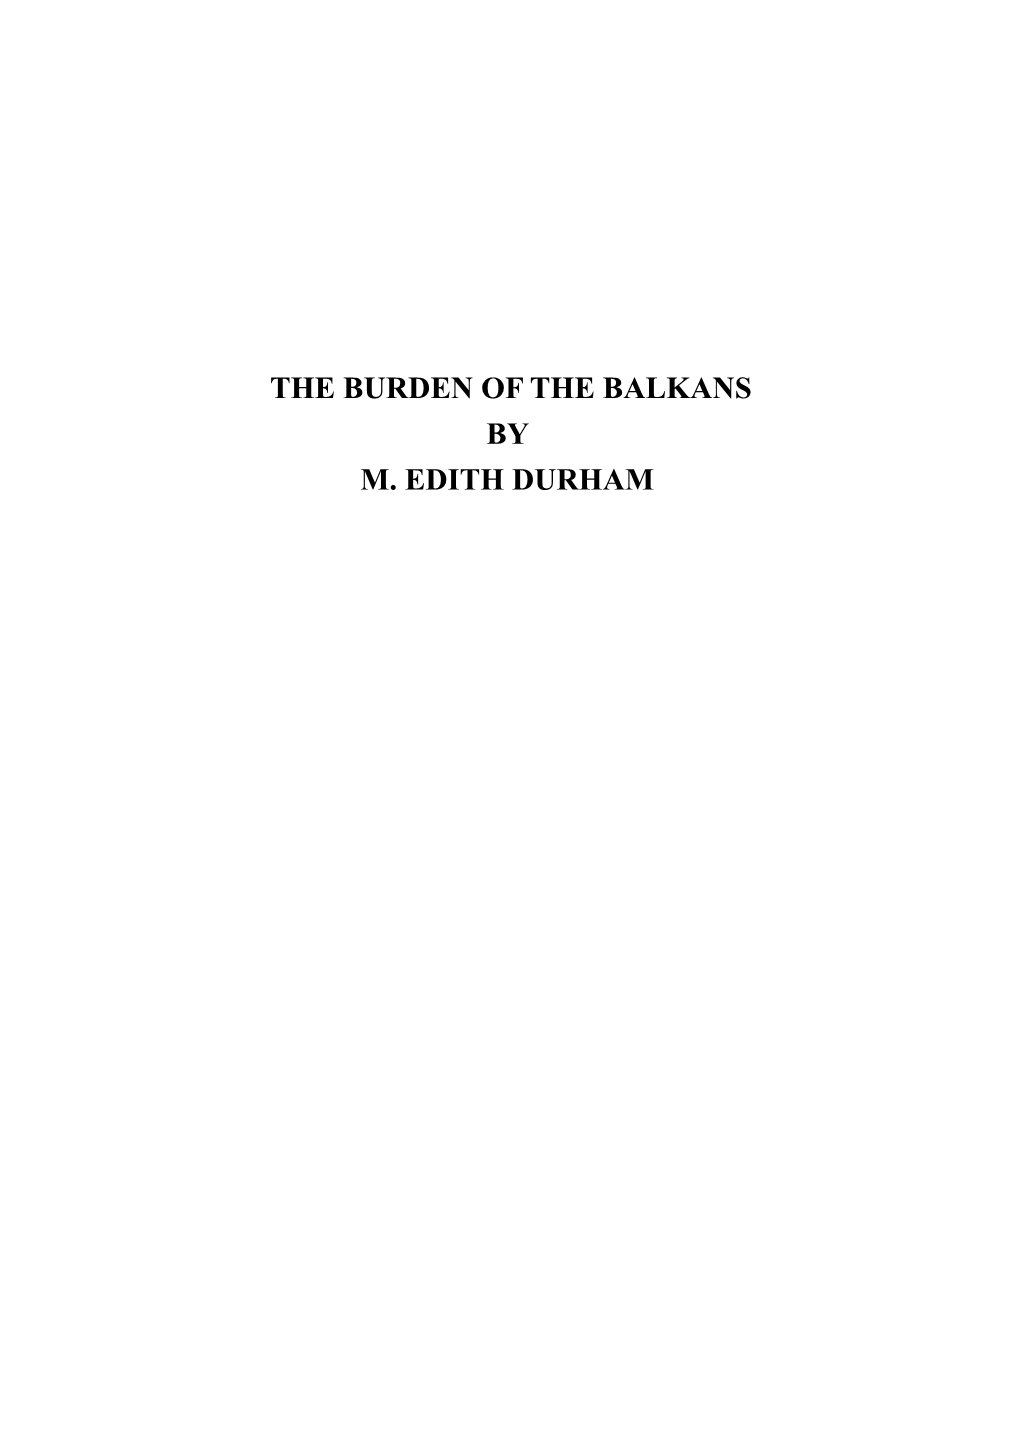 The Burden of the Balkans by M. Edith Durham